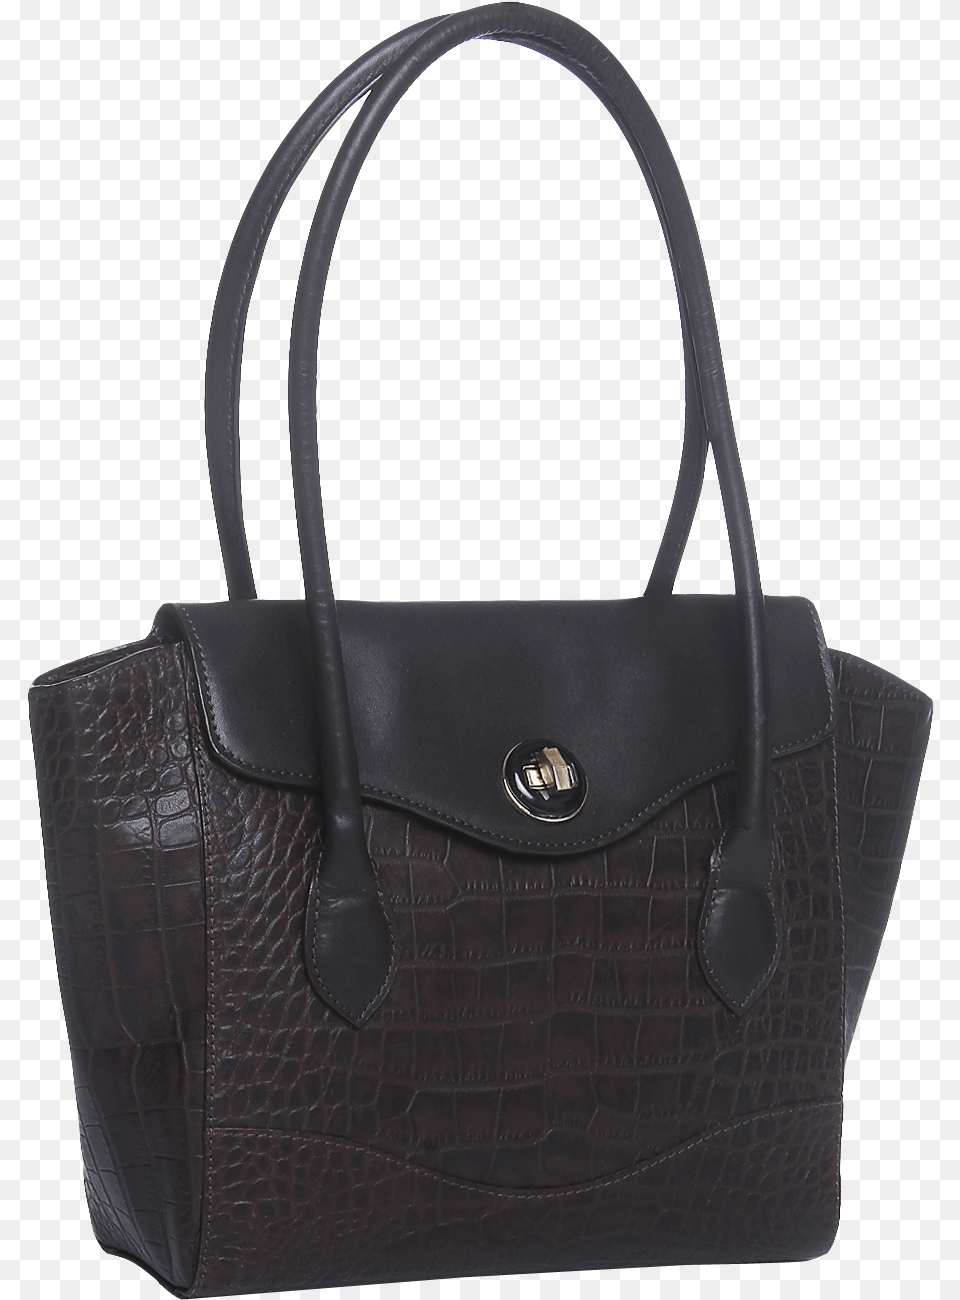 Leather Image Purepng Handbag, Accessories, Bag, Purse, Tote Bag Free Png